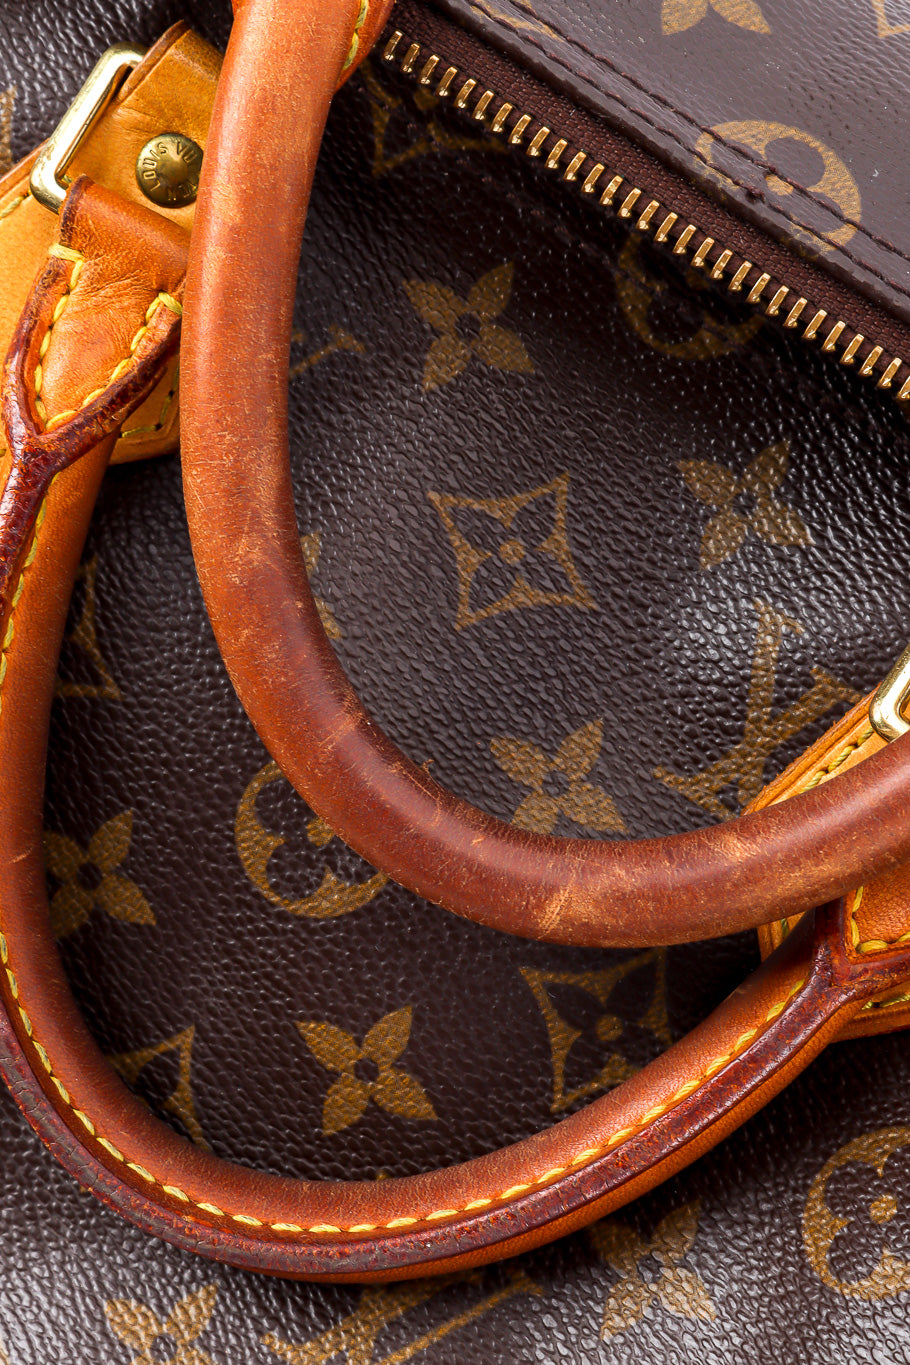 Vintage Louis Vuitton Classic Monogram Speedy 35 Bag wear on handles closeup @Recessla